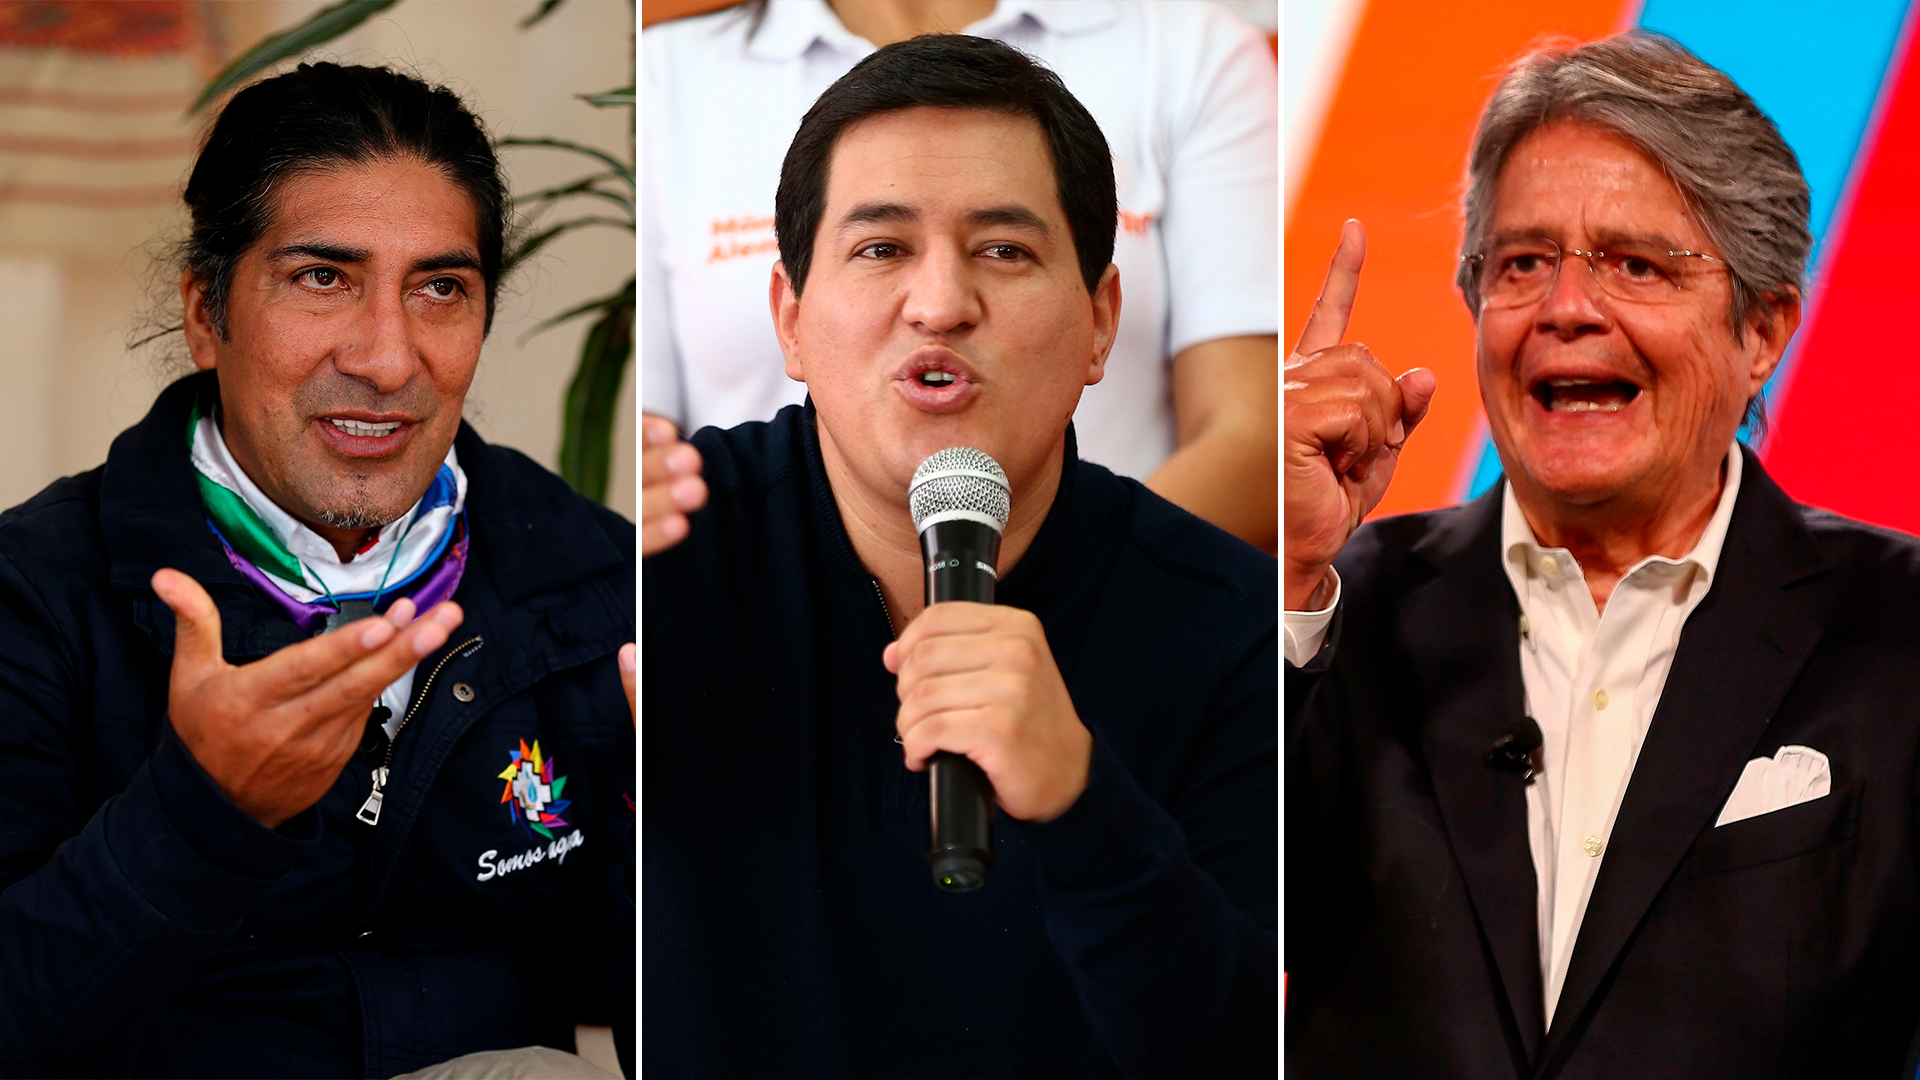 Elecciones en Ecuador: Andrés Arauz irá al ballottage con Yaku Pérez o Guillermo Lasso